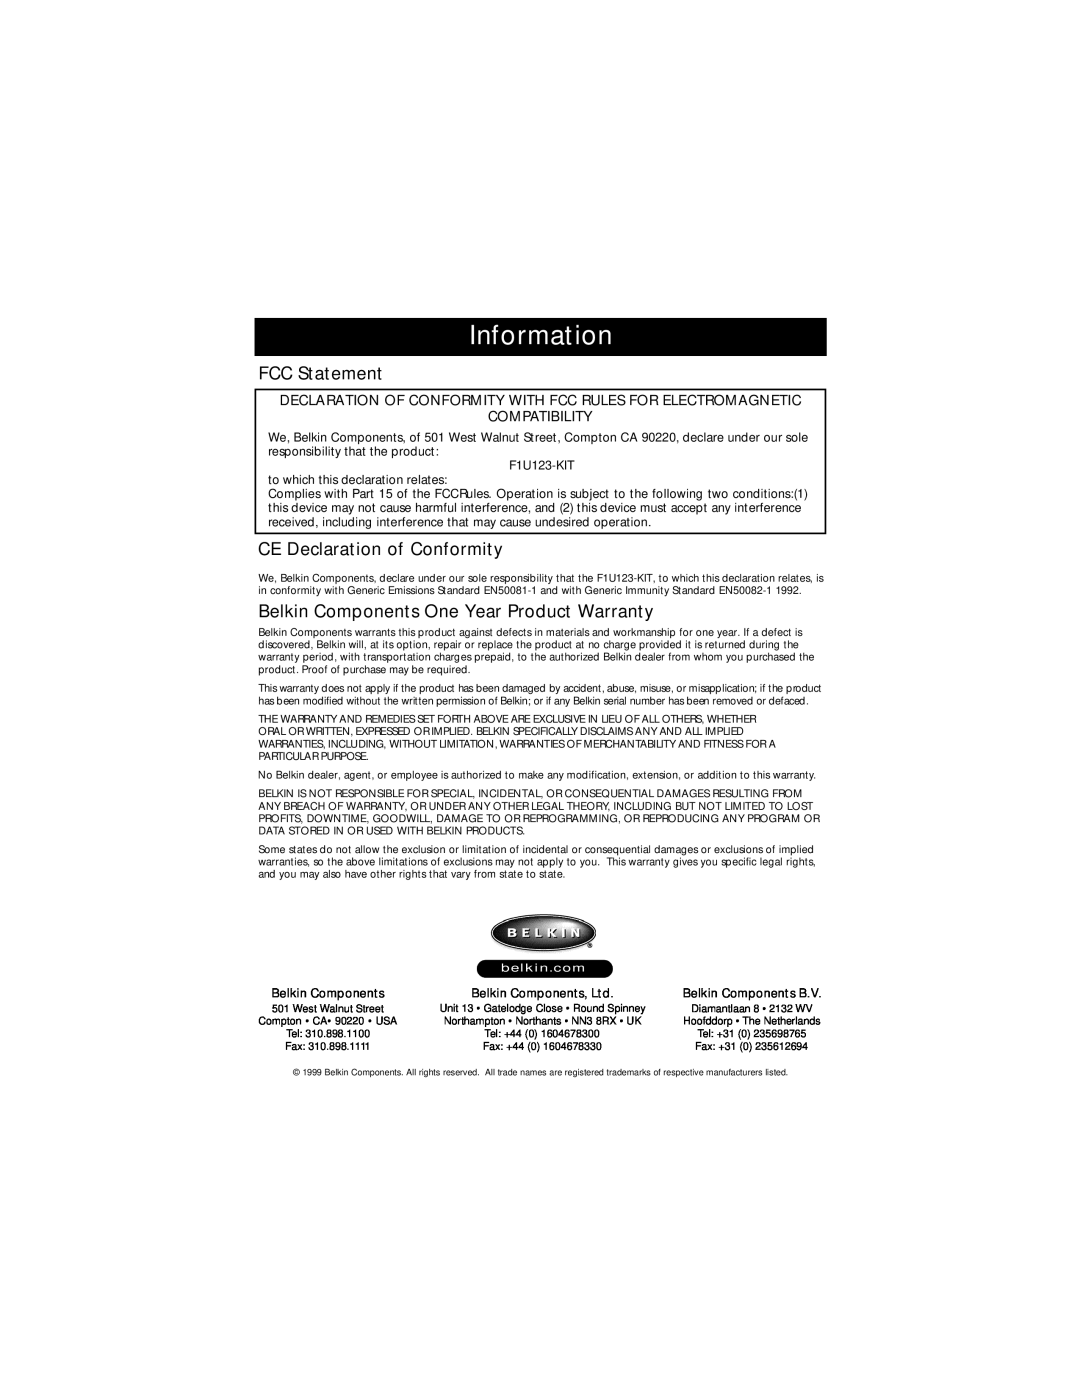 Belkin P73075 Information, FCC Statement, CE Declaration of Conformity, Belkin Components One Year Product Warranty 